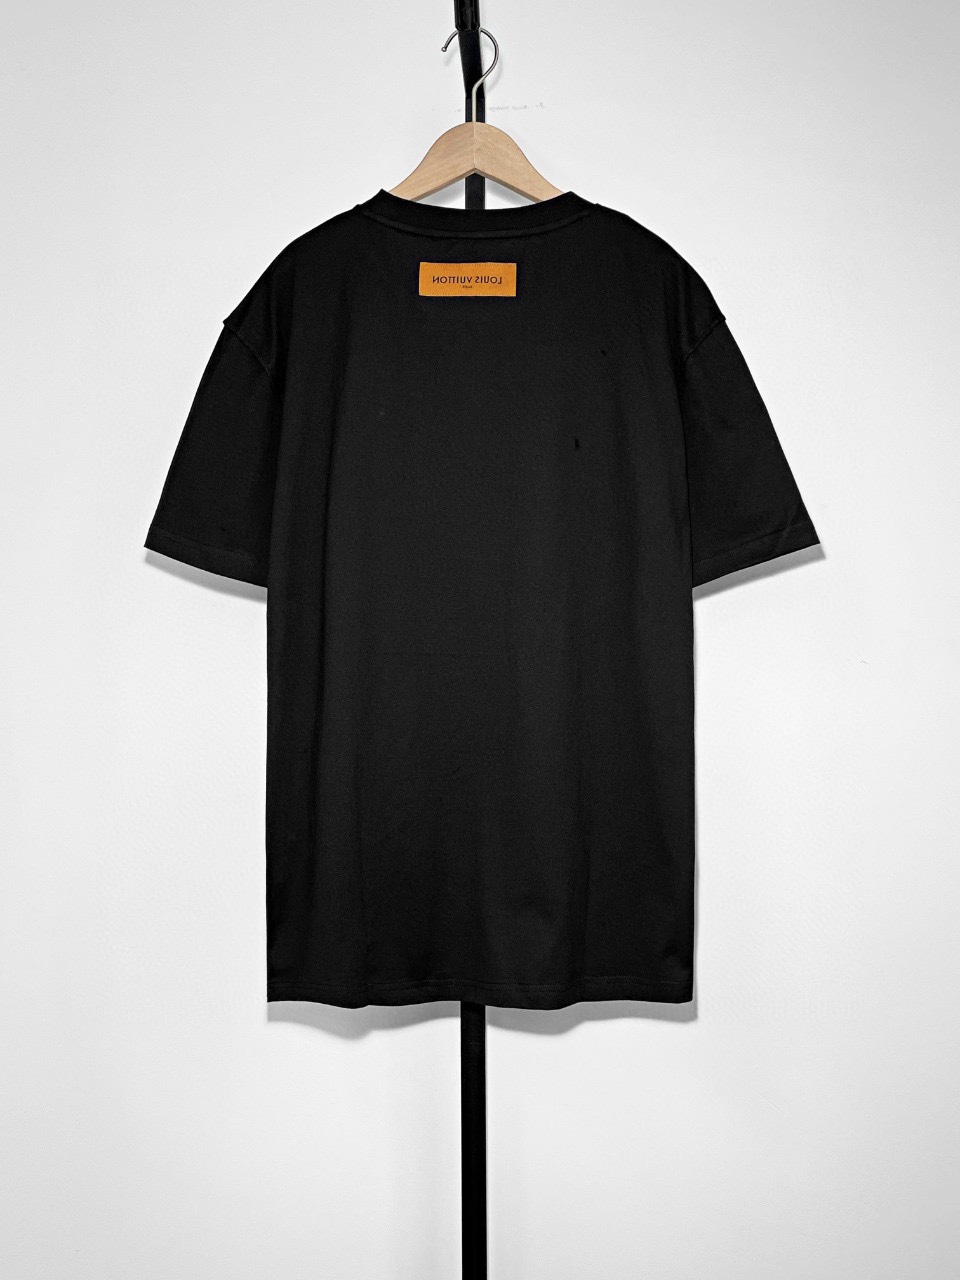 Louis Vuitton Drops Its LV Concert Band T-Shirt